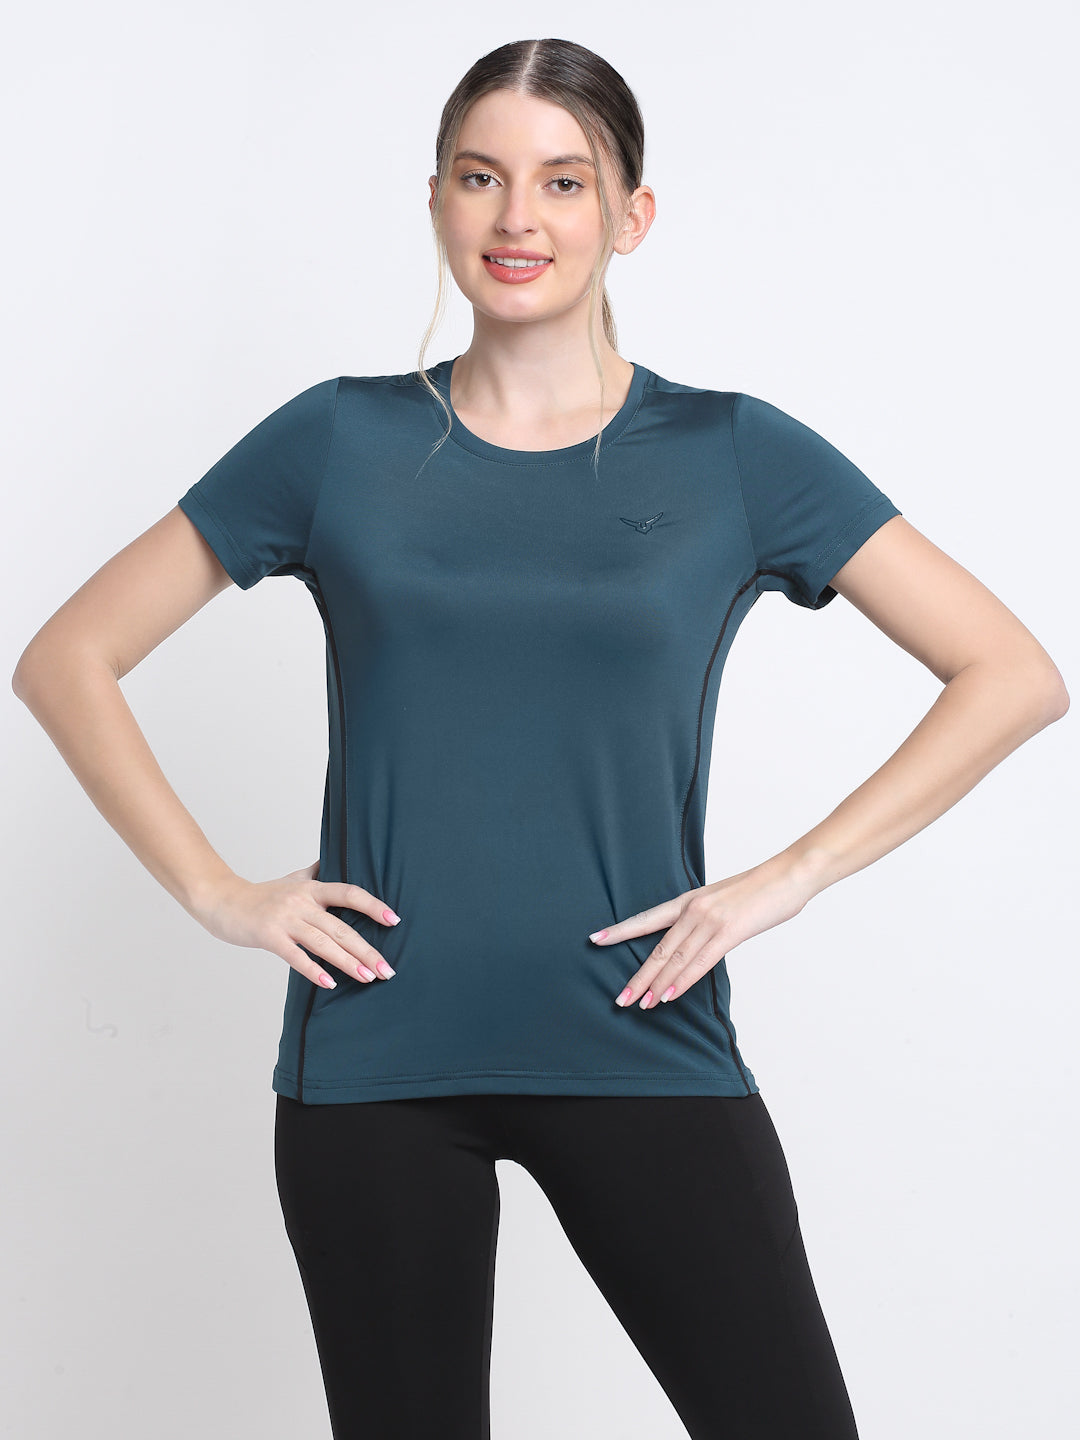 Invincible Women's Slim Fit T Shirt